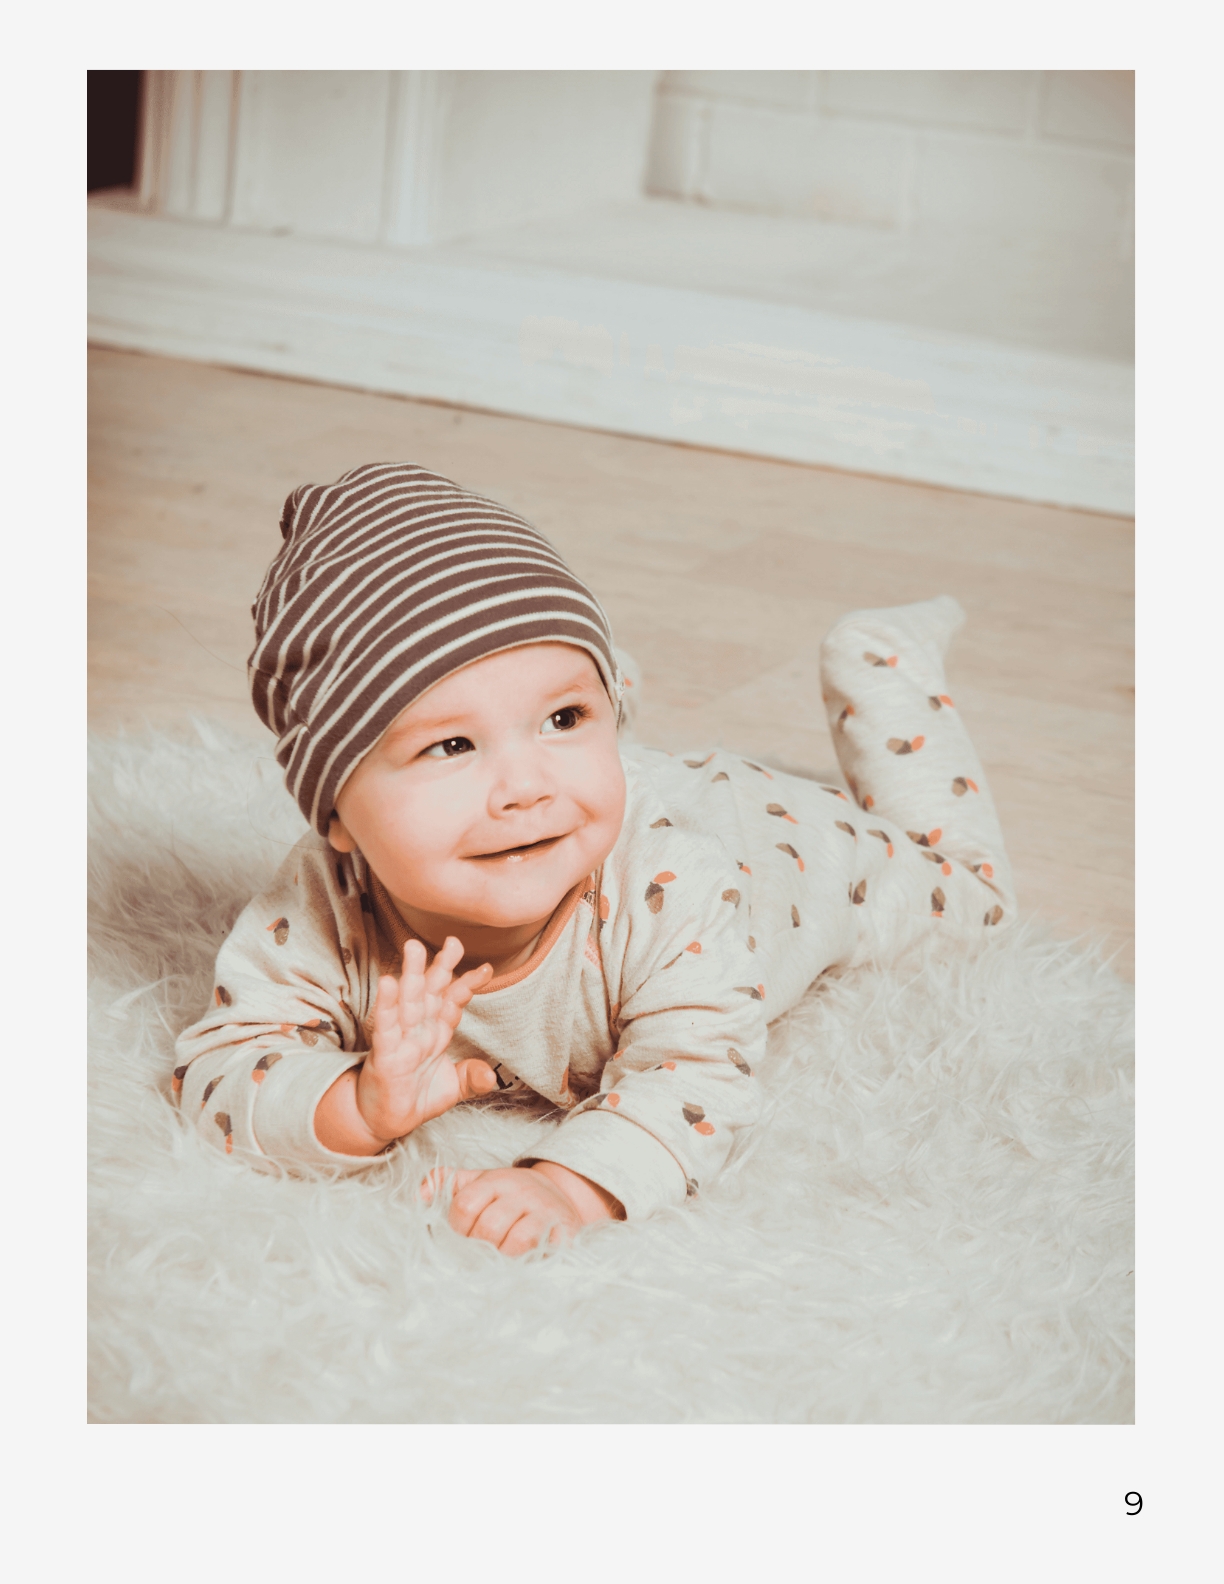 Baby Photobook Template